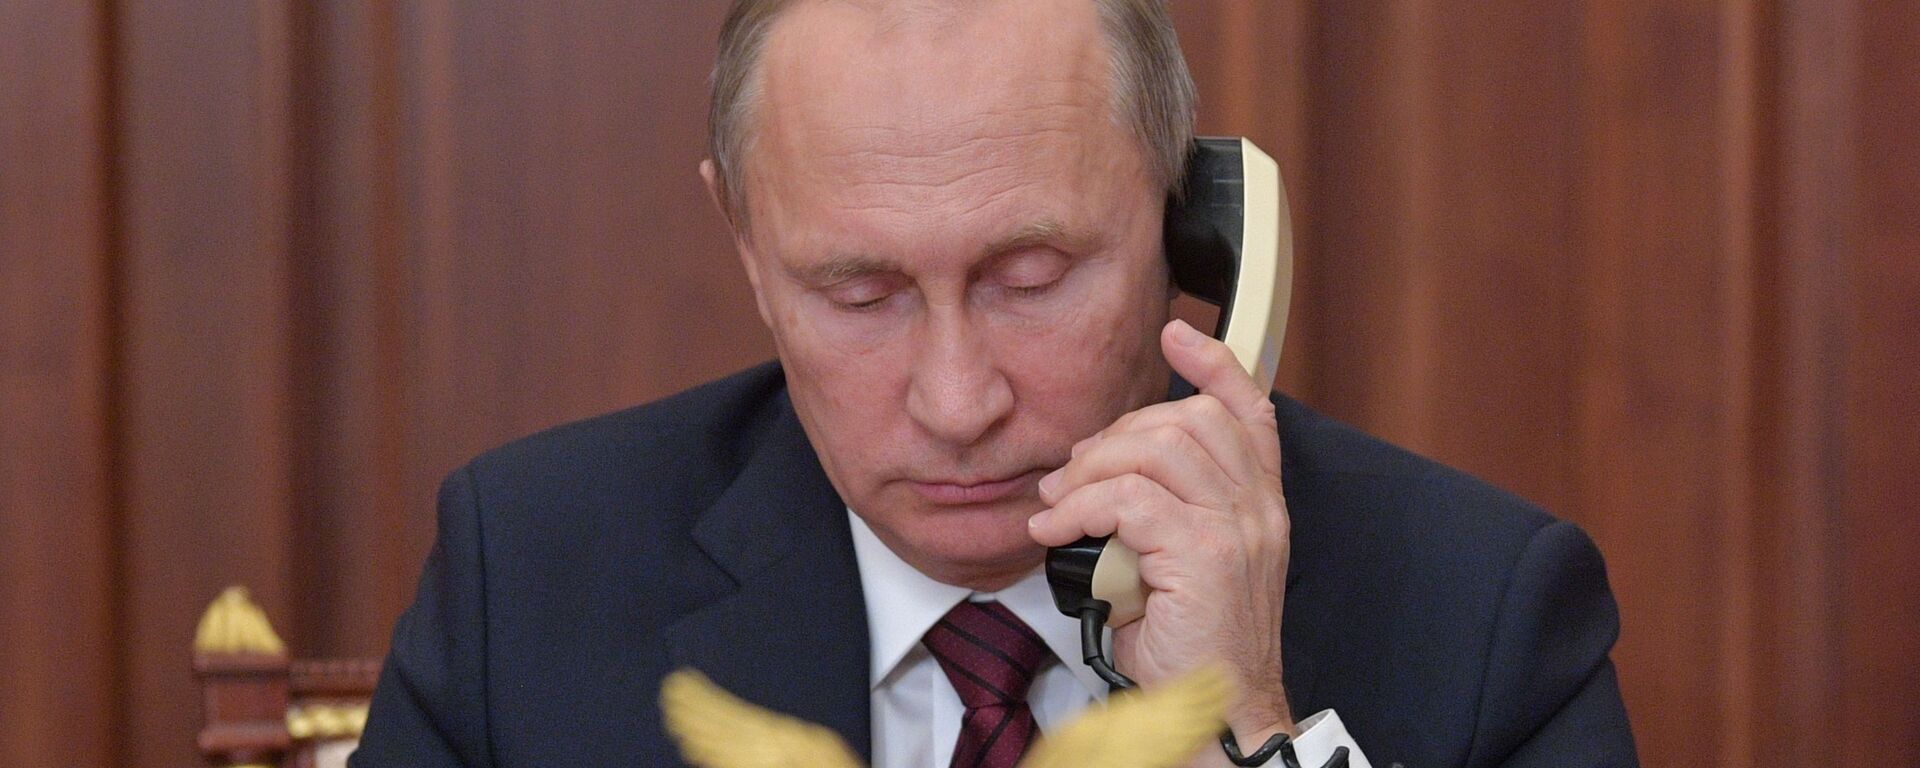 Президент РФ Владимир Путин во время телефонного разговора - Sputnik Тоҷикистон, 1920, 15.09.2021